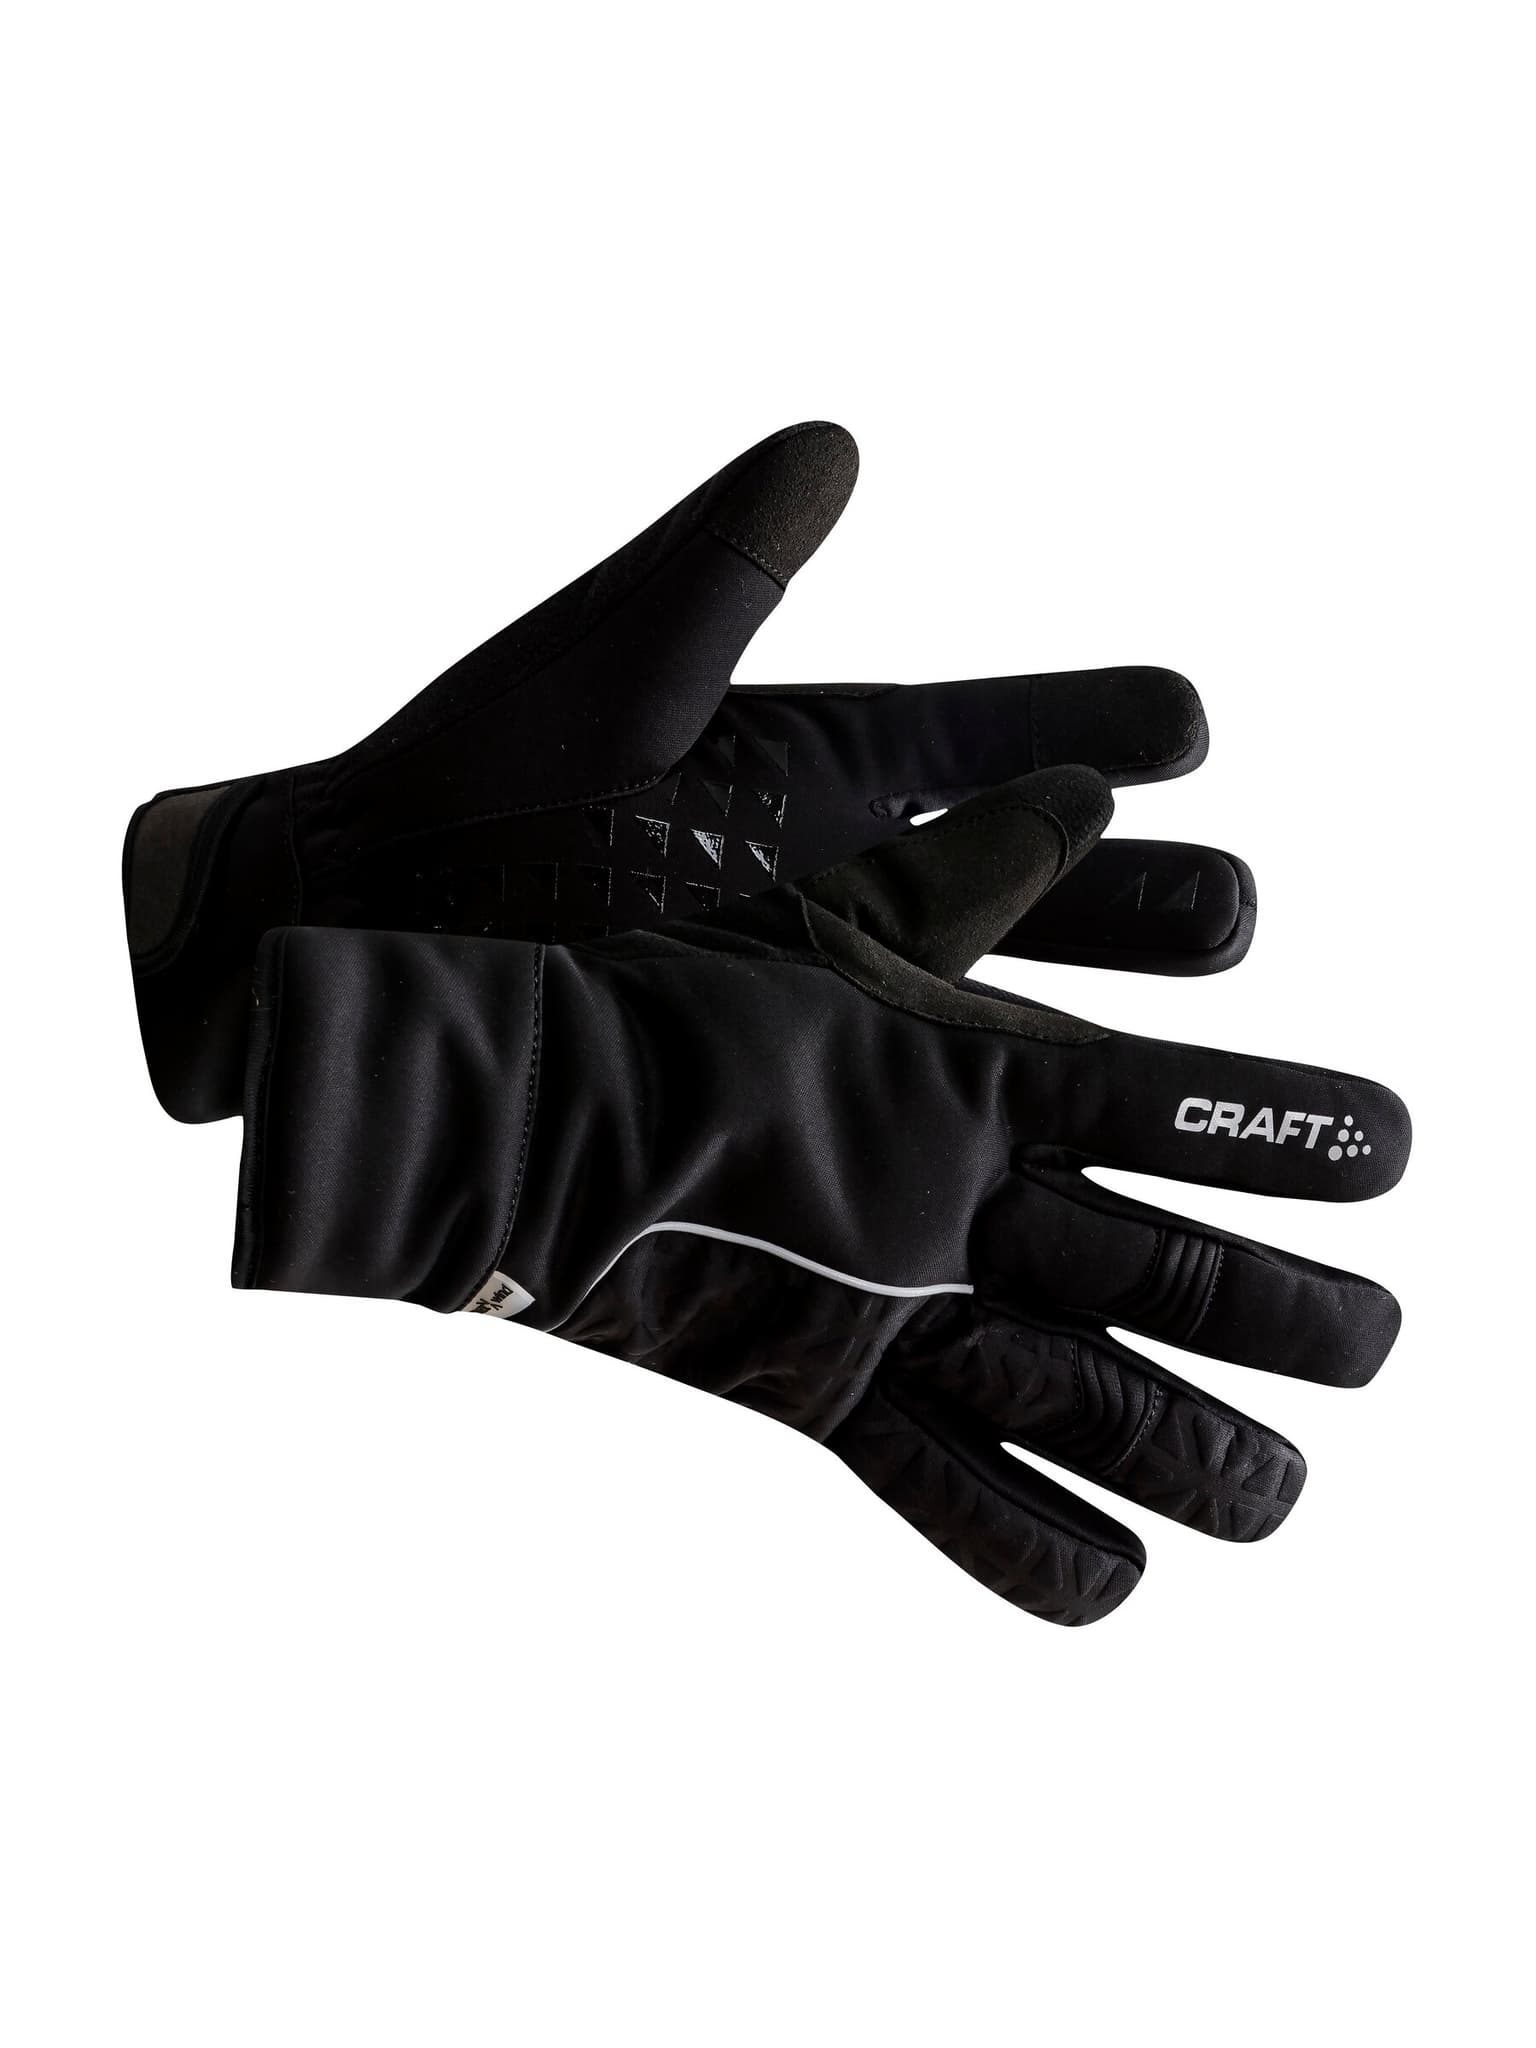 Craft Craft ADV SUBZ SIBERIAN GLOVE Bike-Handschuhe schwarz 1